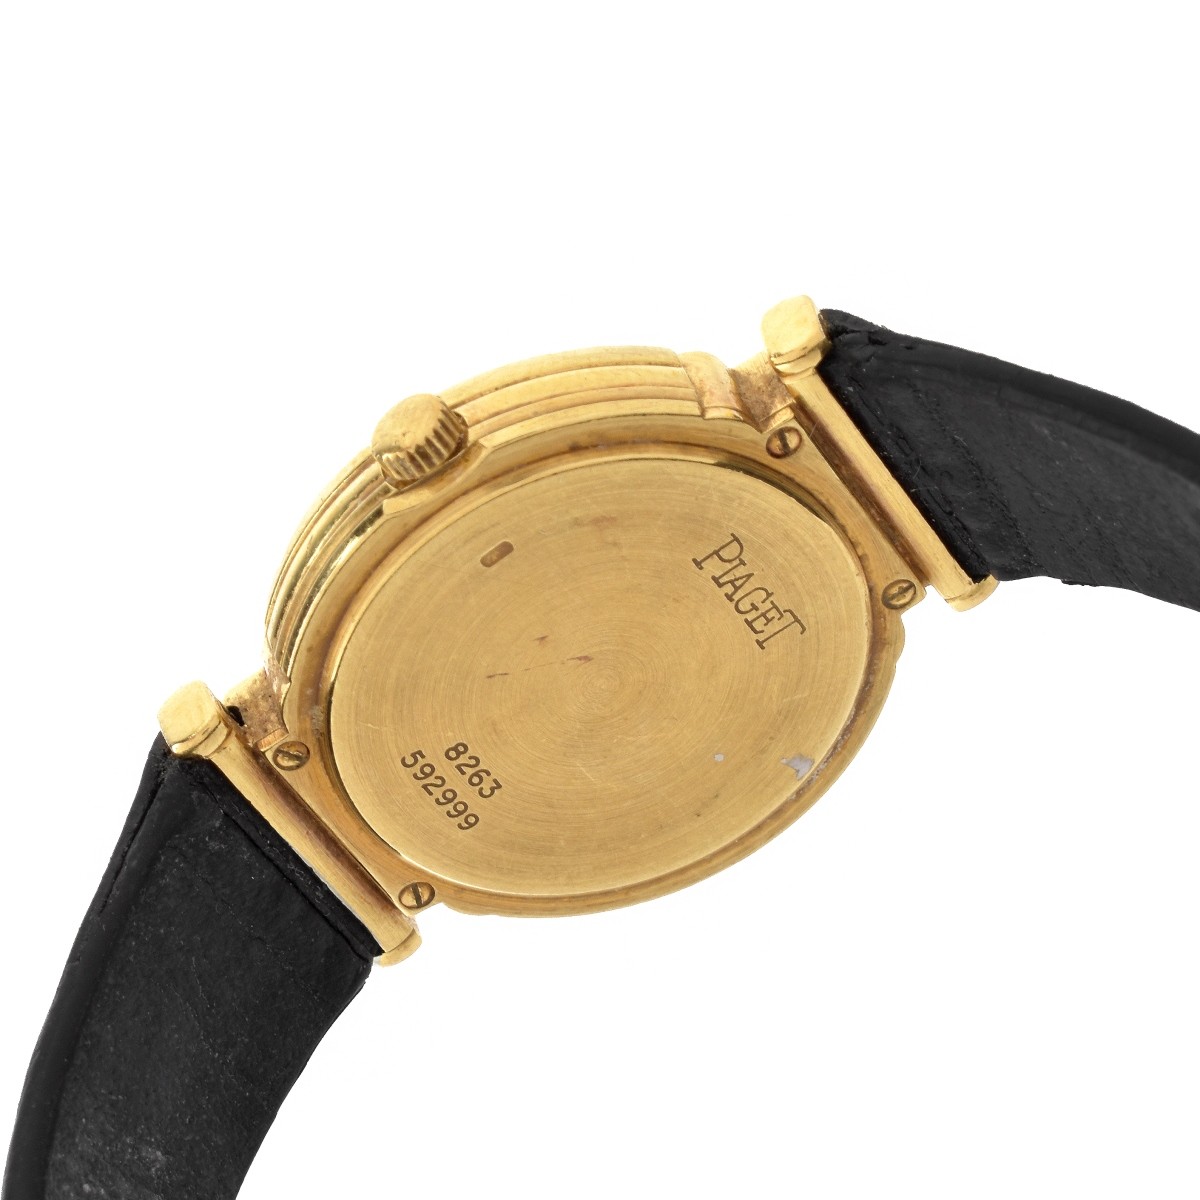 Lady's Piaget 18K Watch